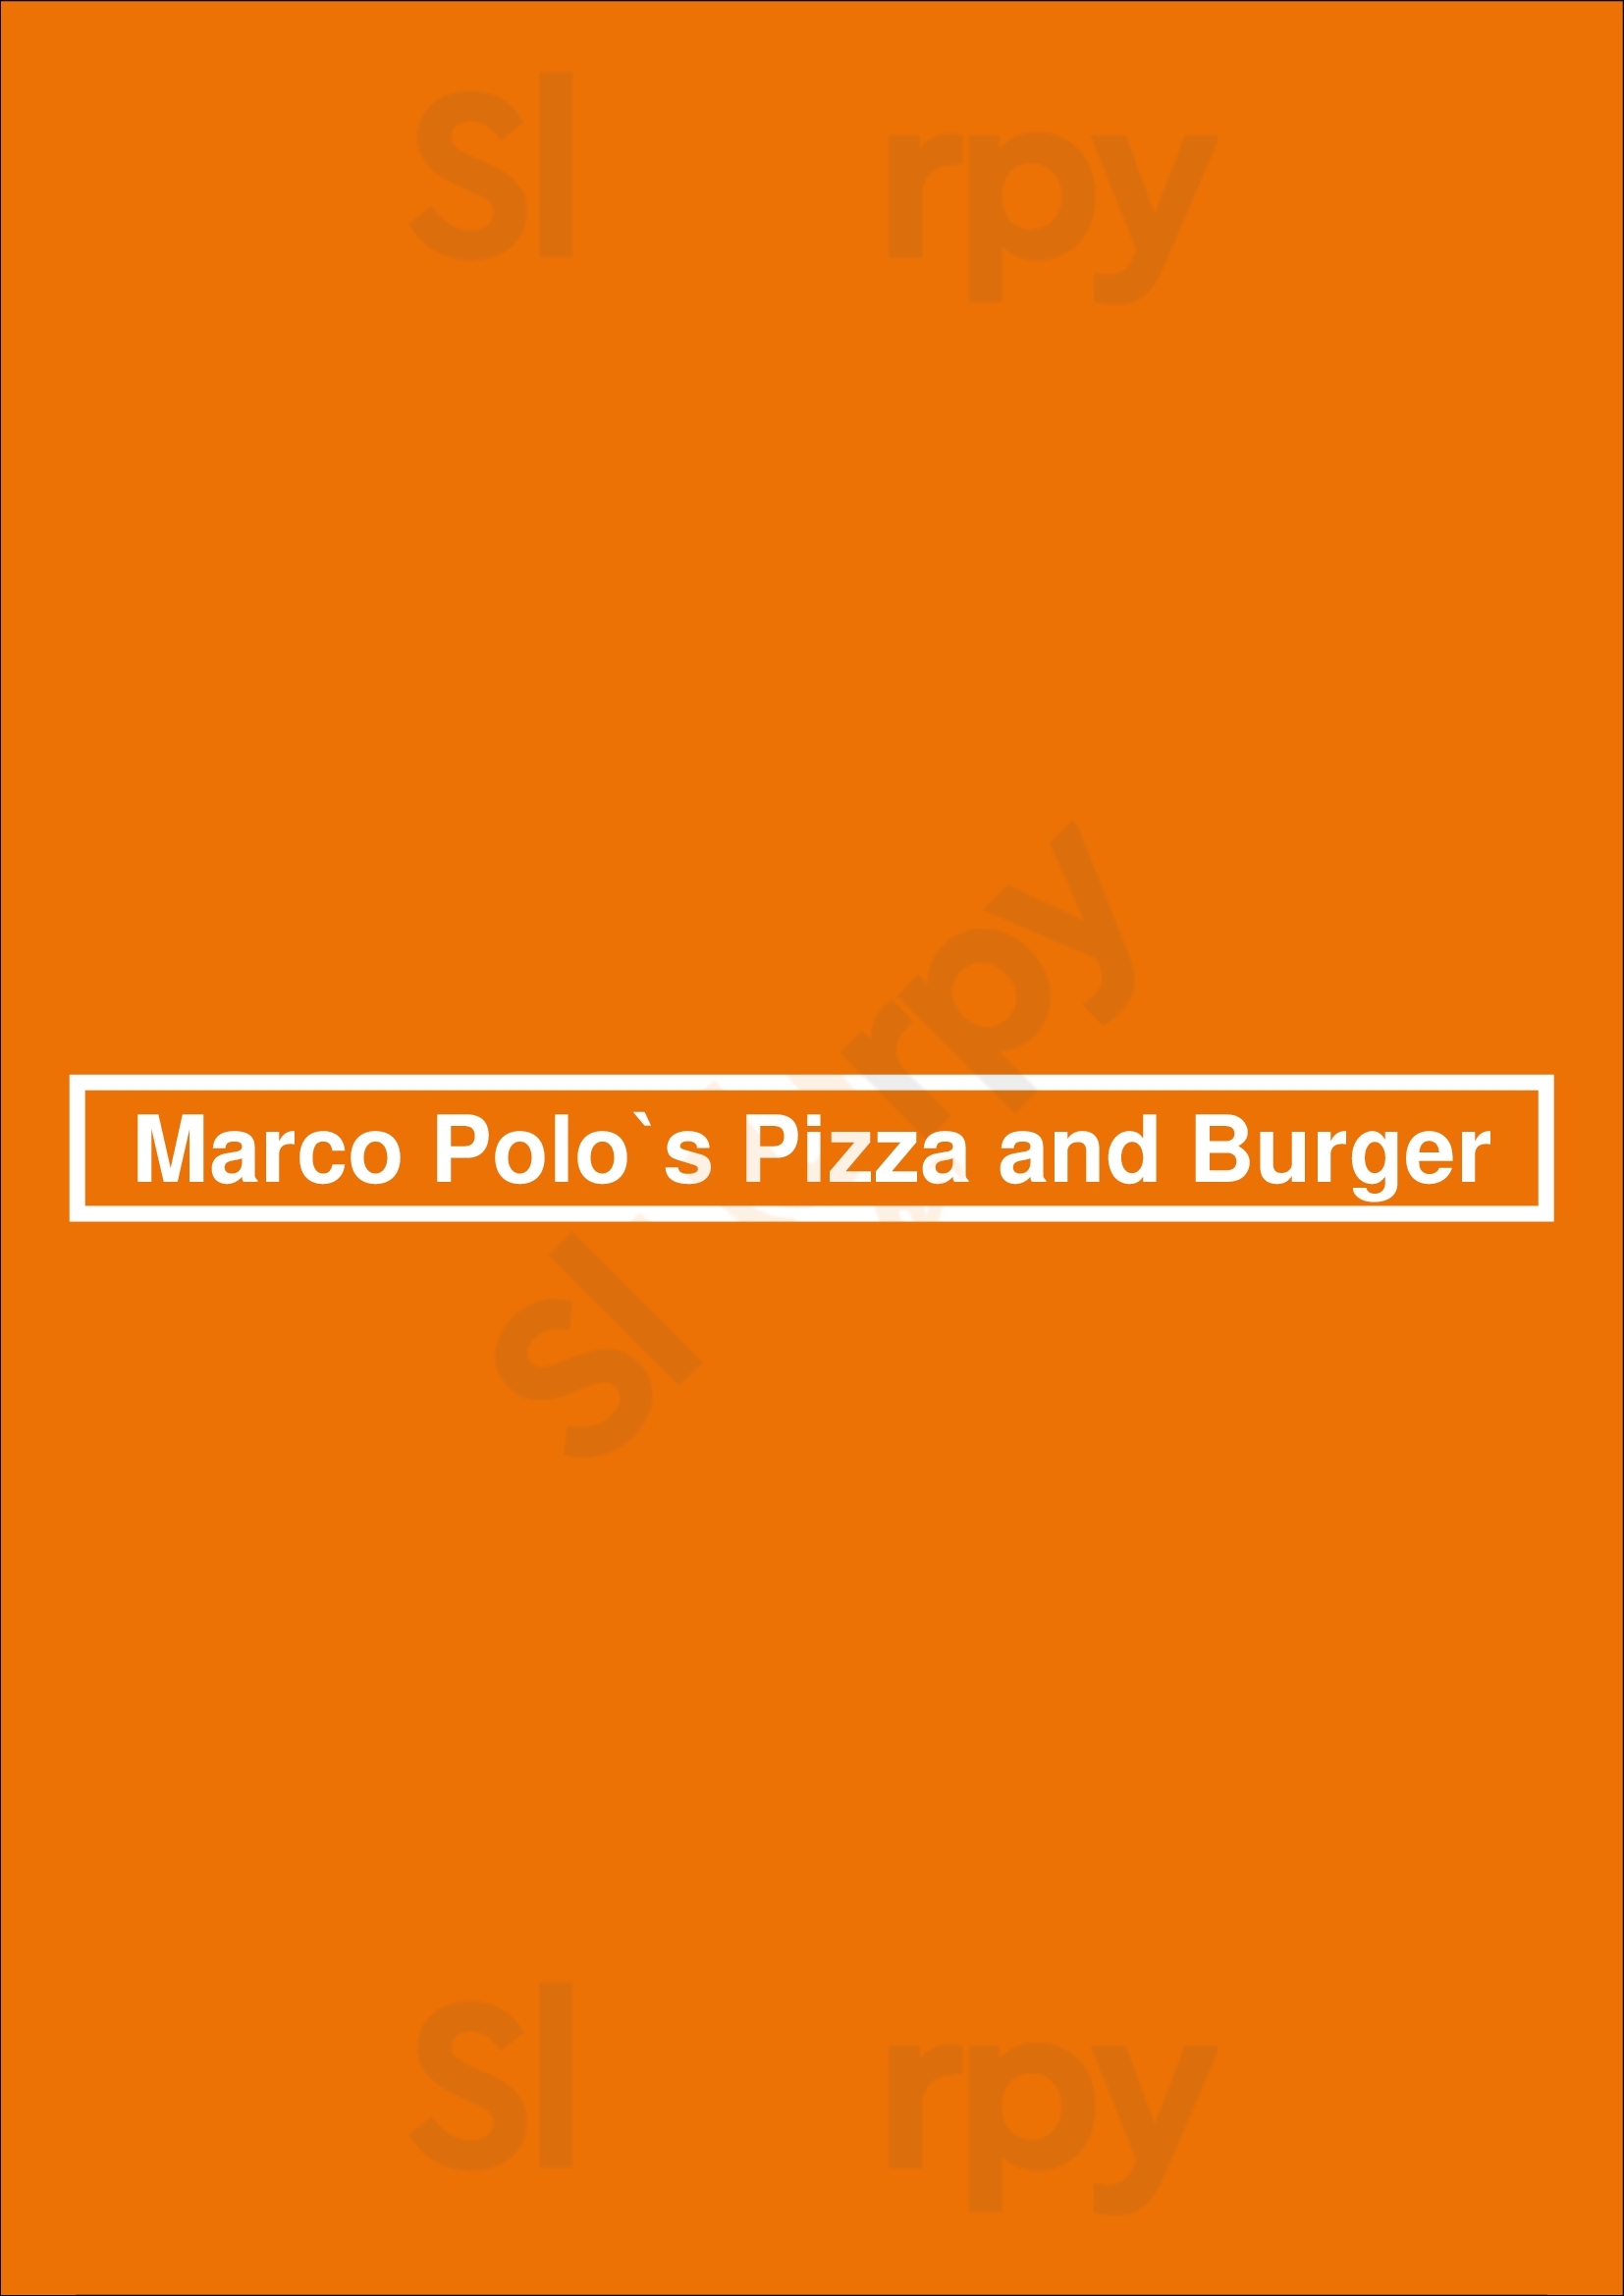 Marco Polo's Pizza Nashville Menu - 1